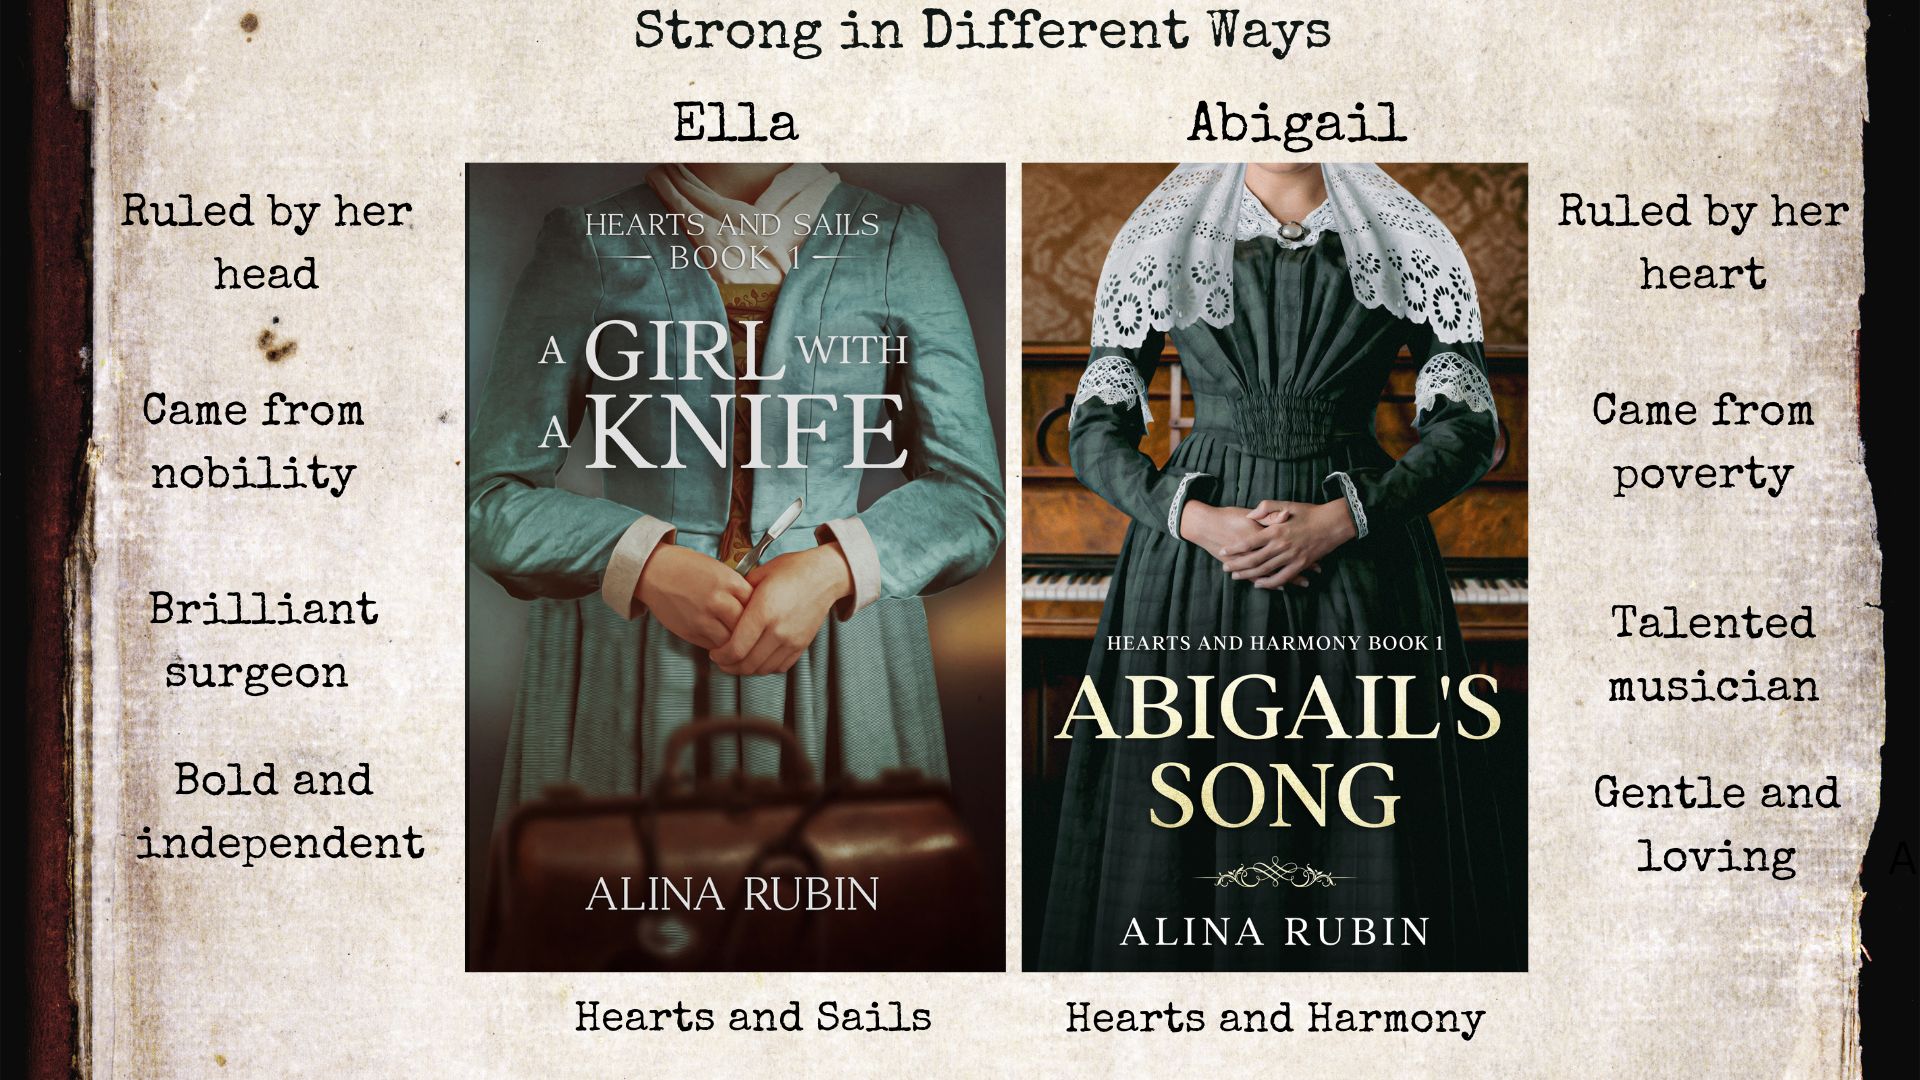 Ella vs Abigail